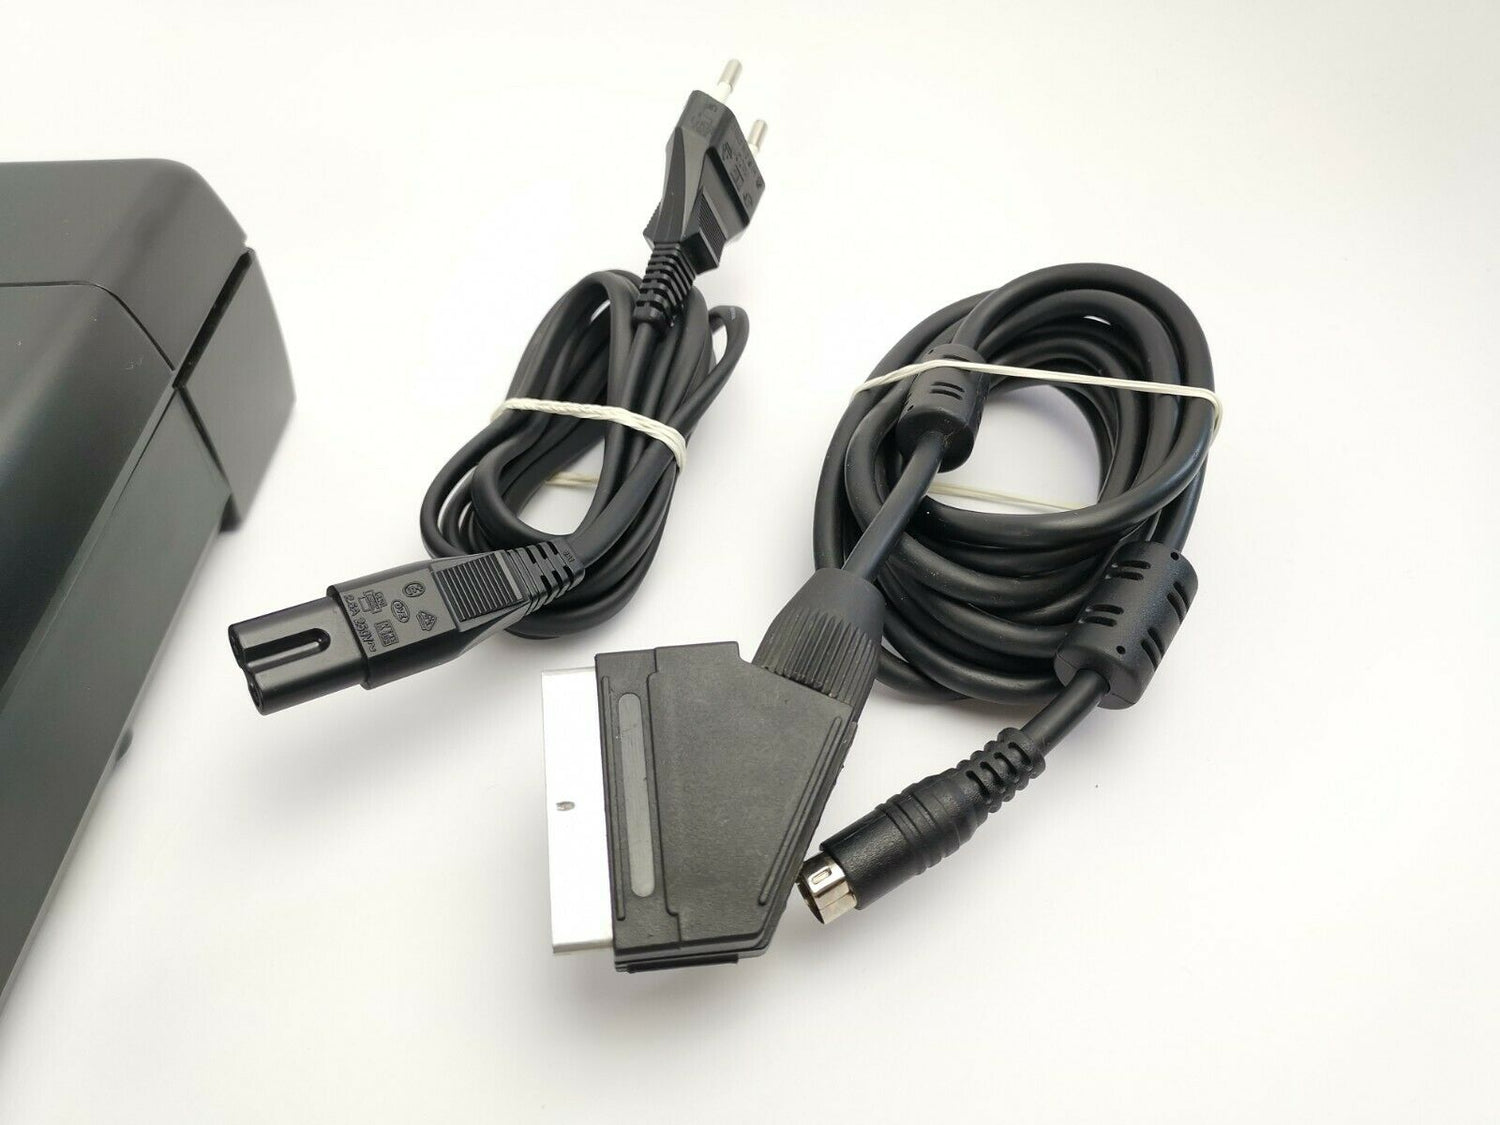 Sega Saturn console bundle with control pad, connection cables and Segaflash Vol 2